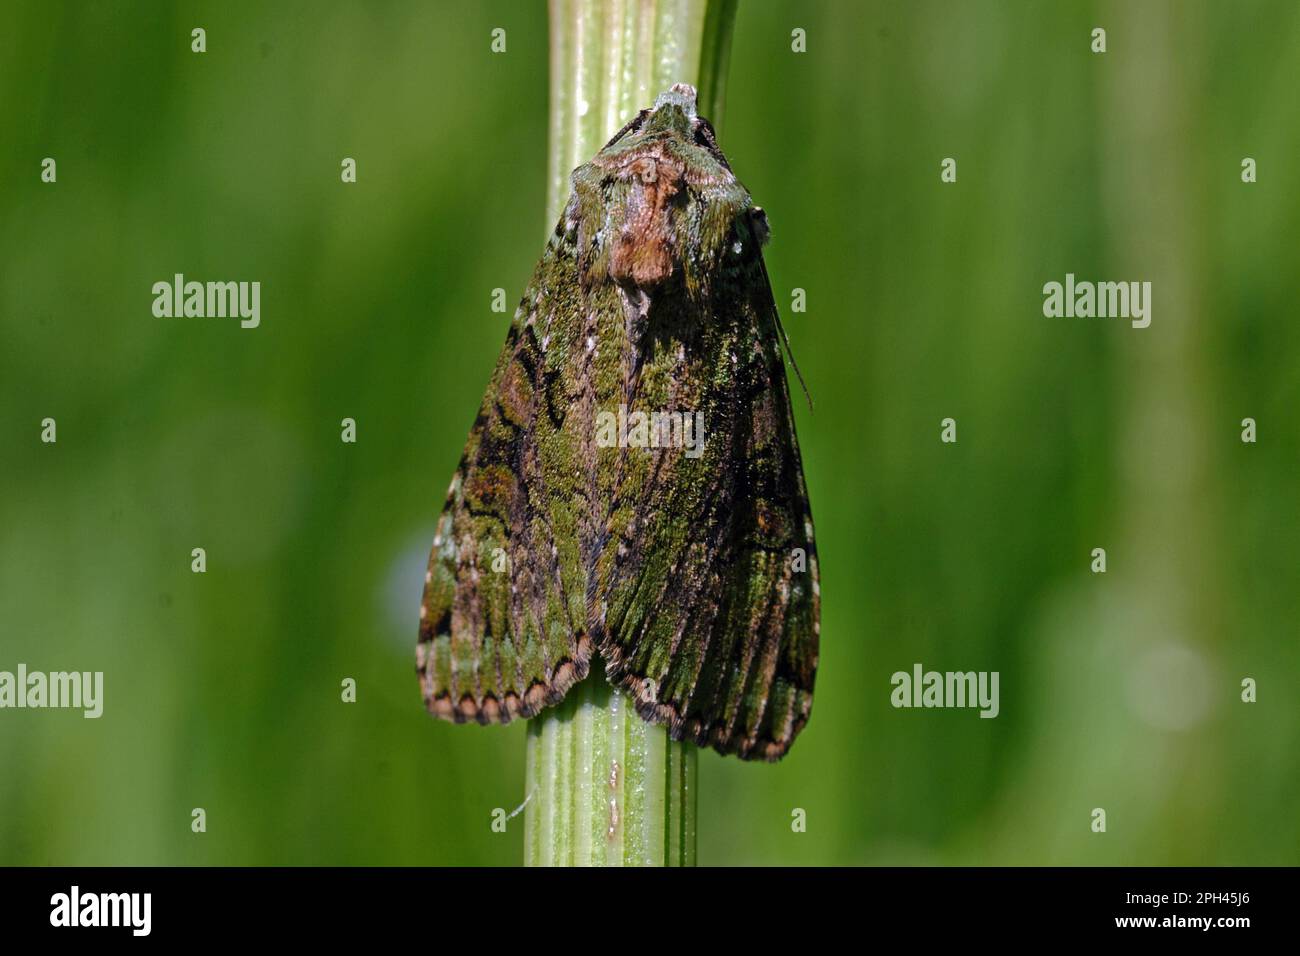 Green bilberry owl Stock Photo